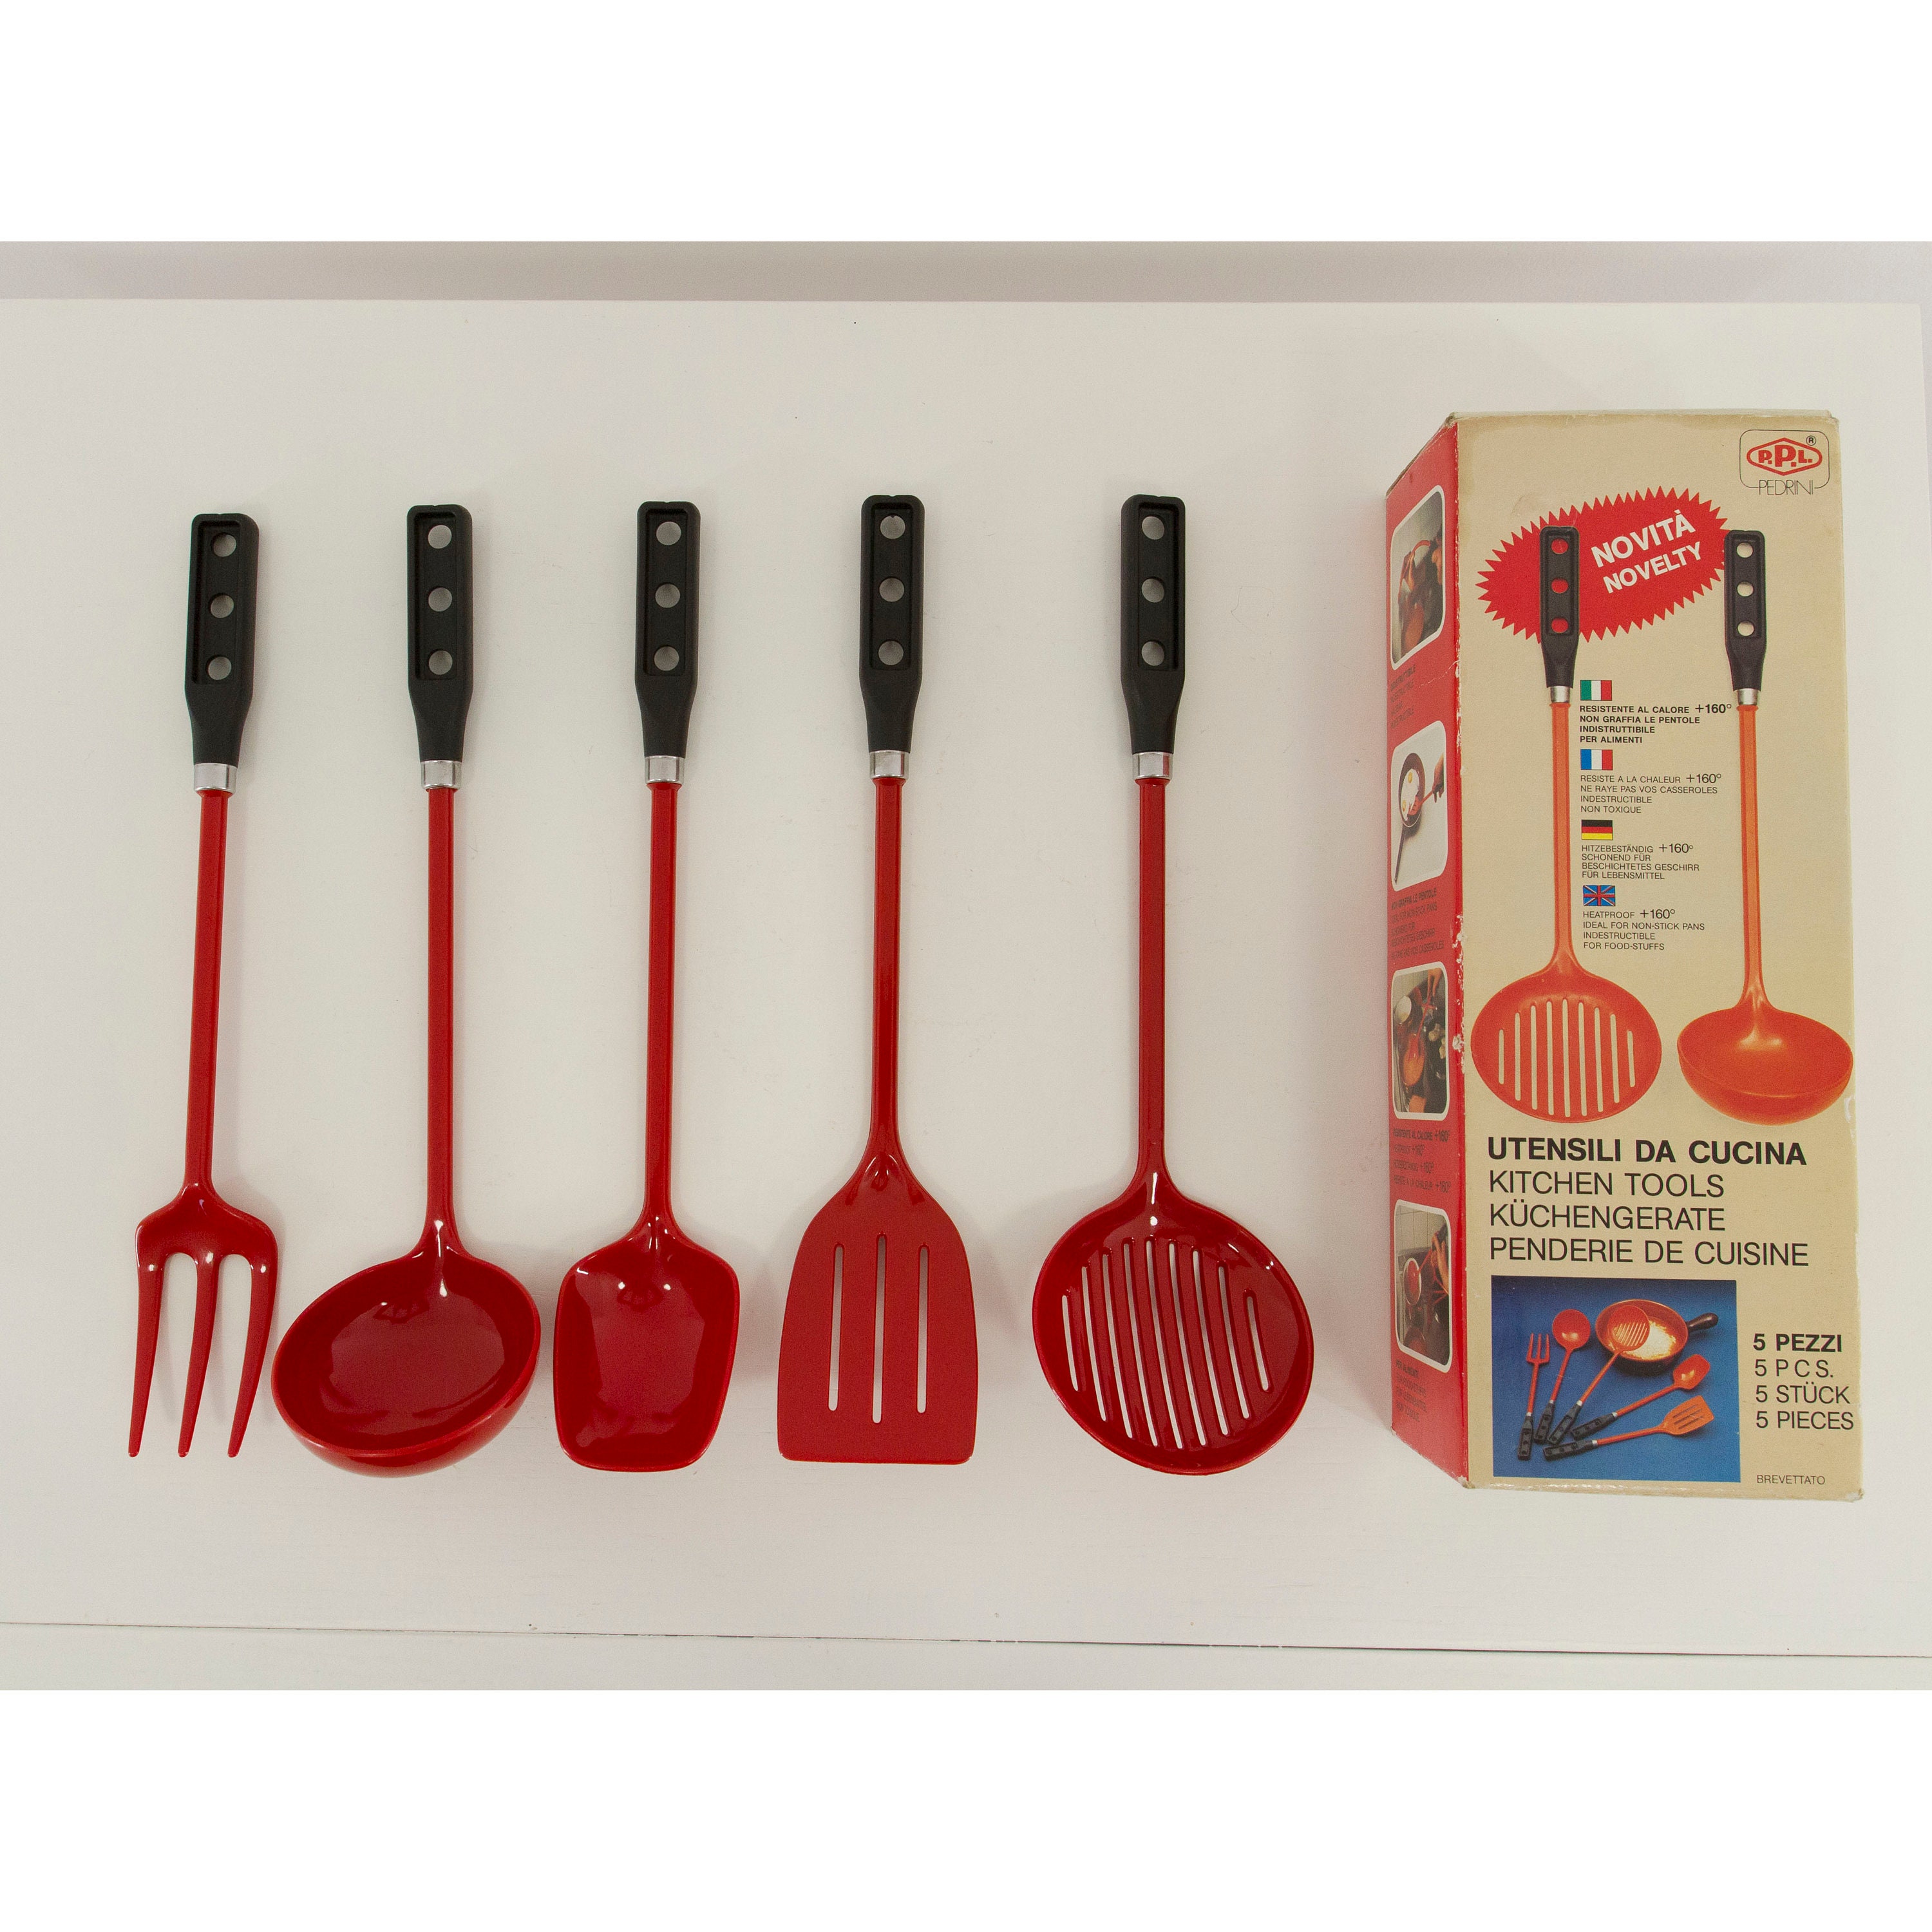 Vintage Red Plastic Kitchen Utensils, Pedrini Kitchen Tools 5 Pcs Italian  Design, Retro 1980s 